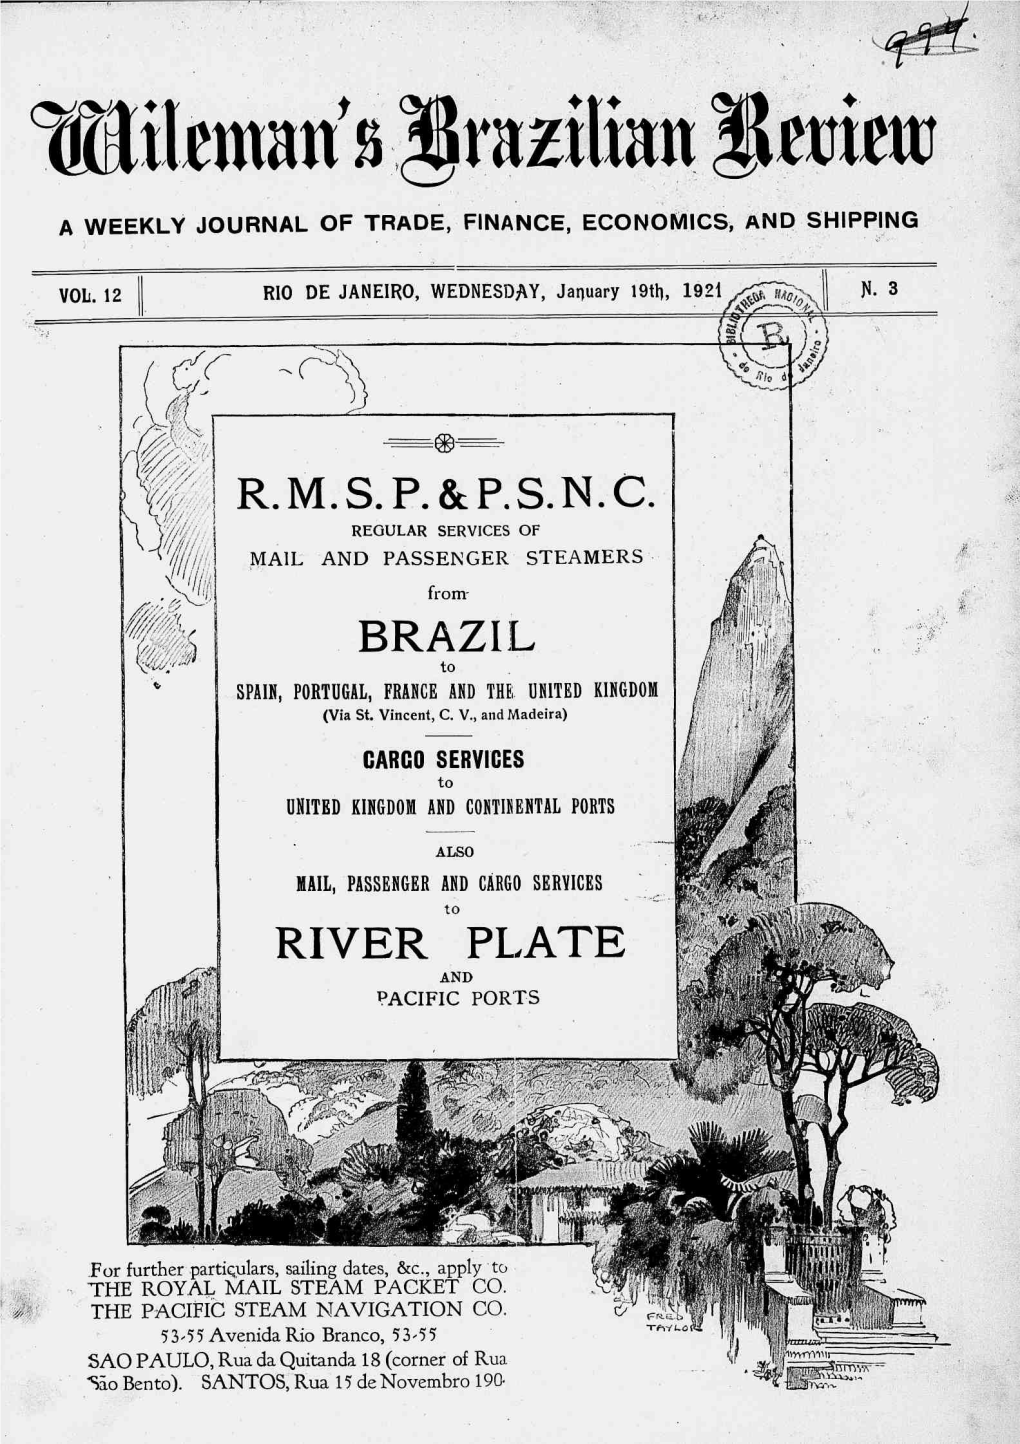 R.M.S.P.&P.S.N.C. Brazil River Plate